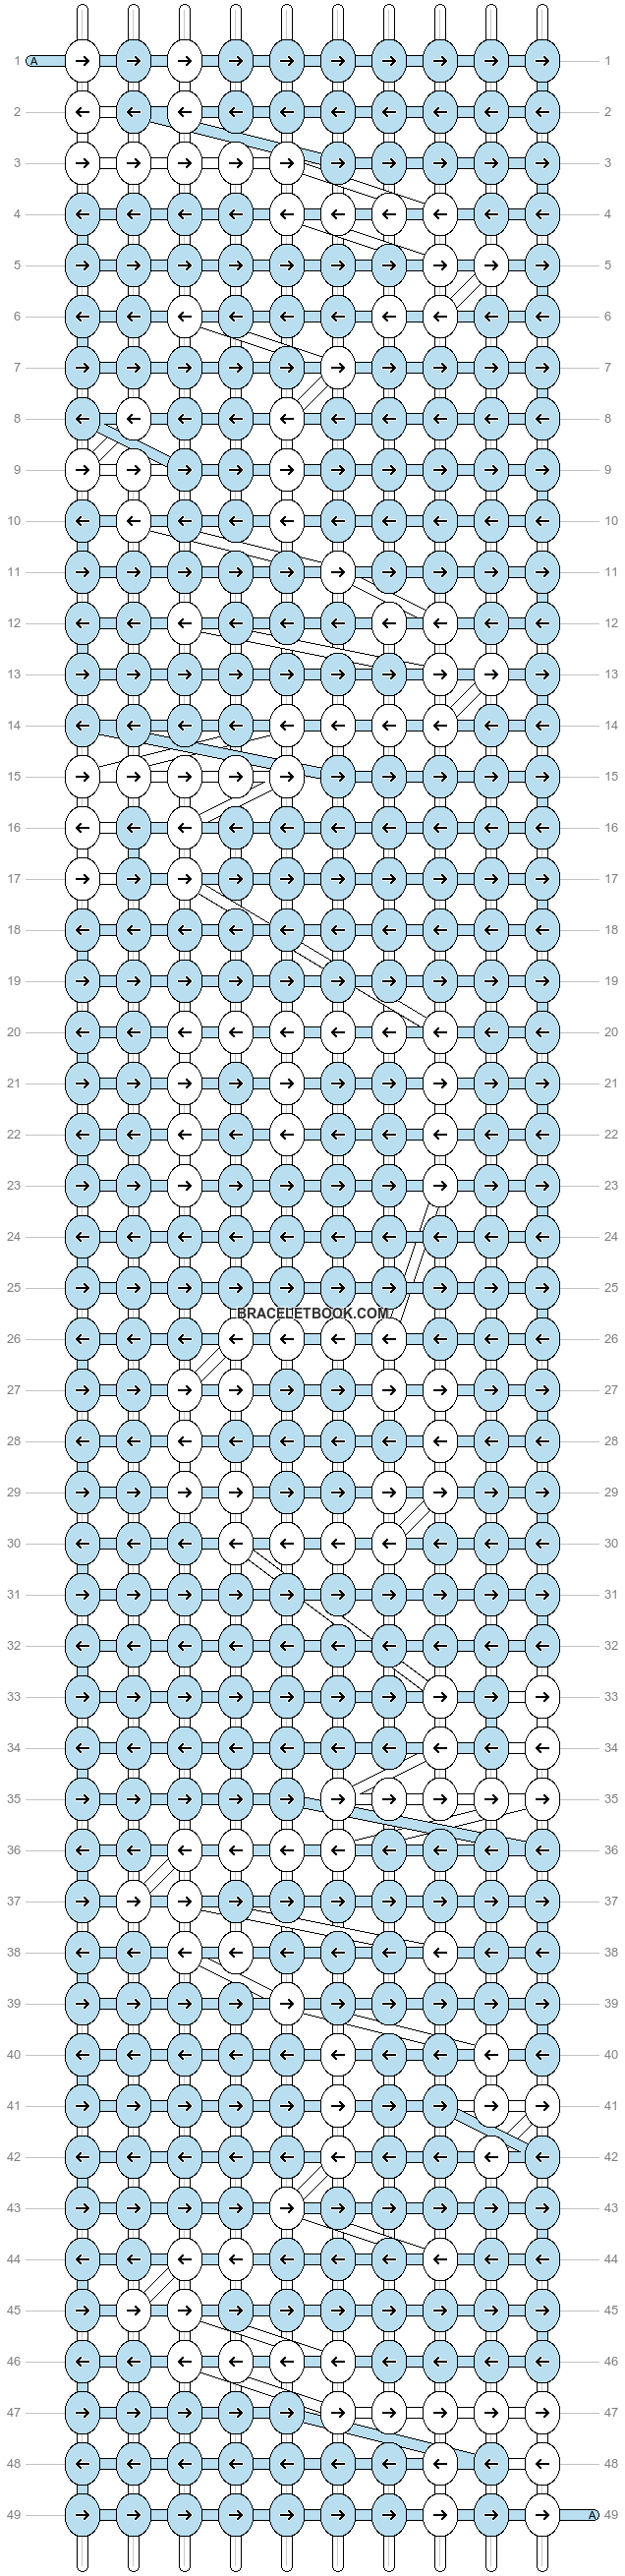 Alpha pattern #29169 variation #47979 pattern